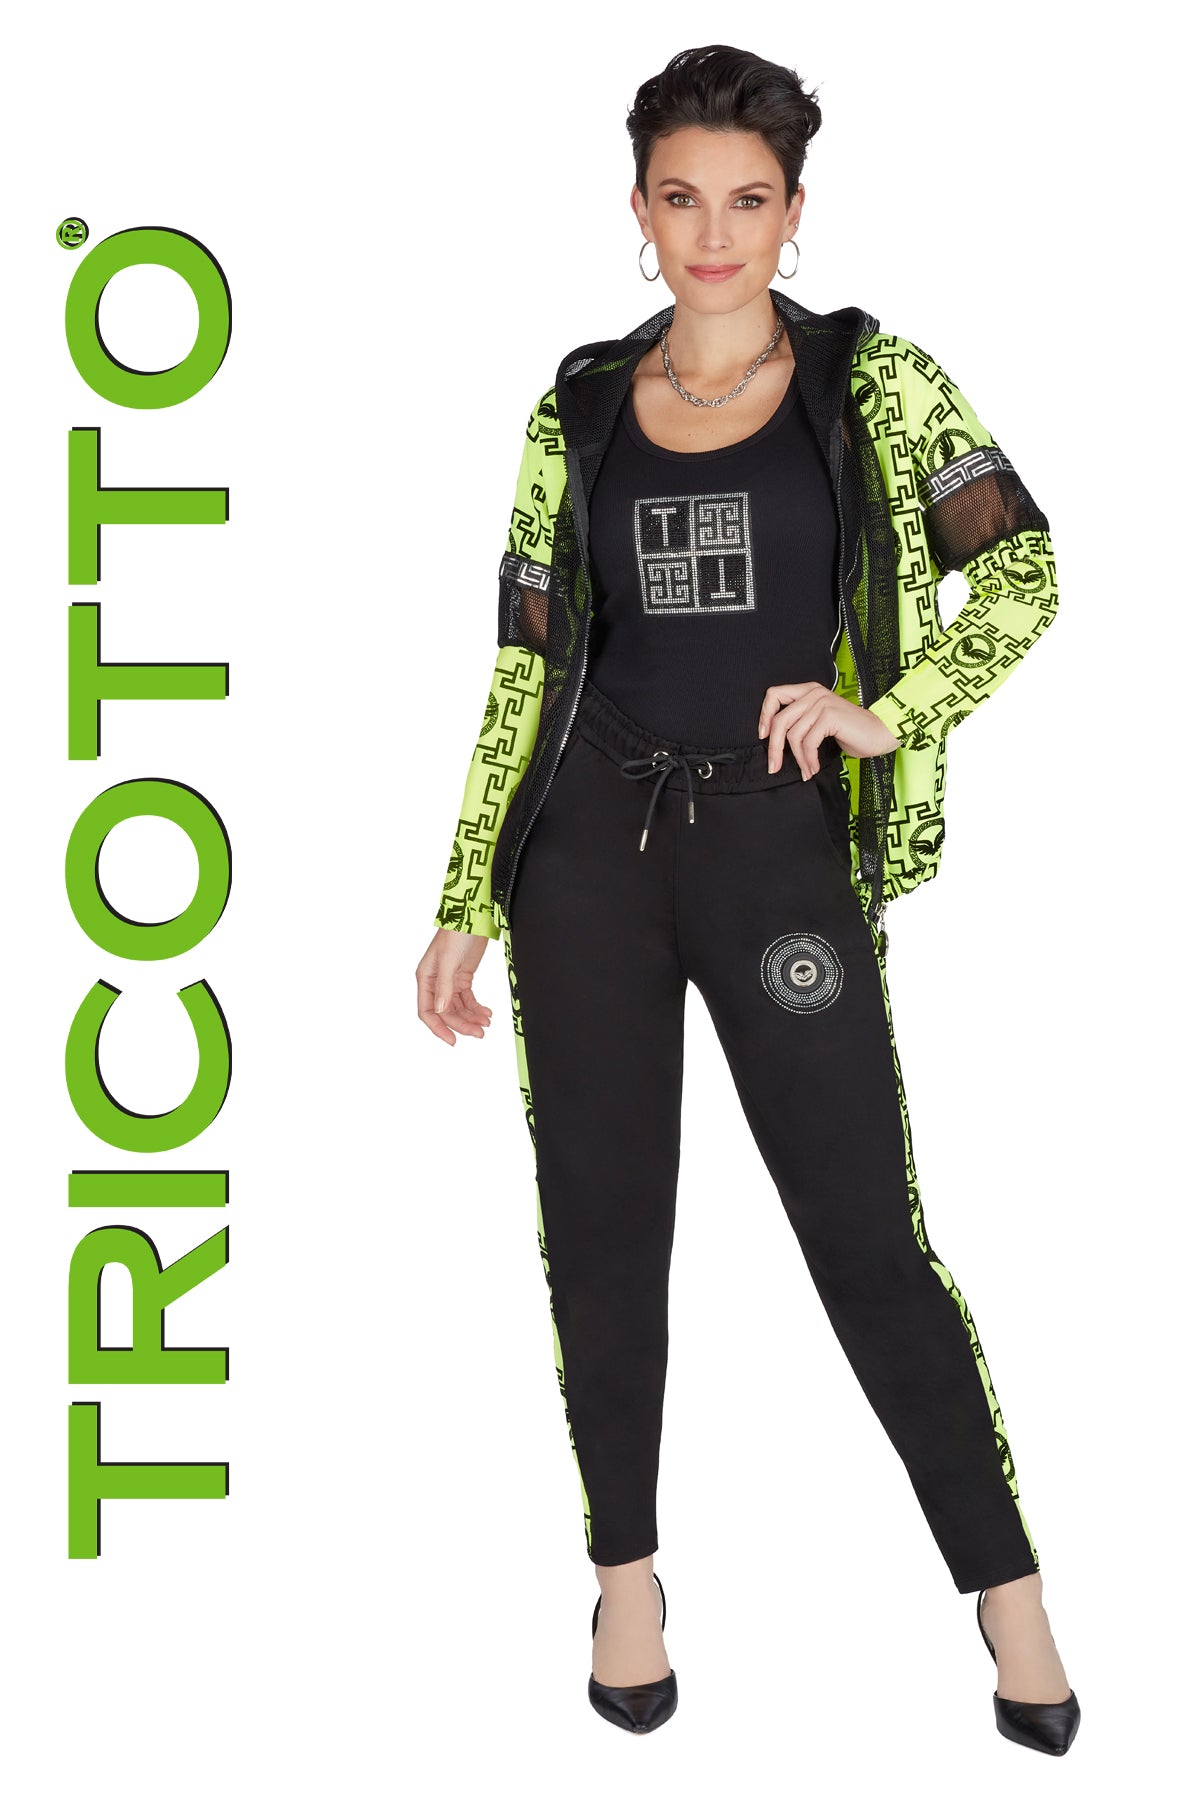 Tricotto Jogging Suits Online-Tricotto Pants-Buy Tricotto Pants Online-Tricotto Clothing Montreal-Tricotto Online Shop-Women's Jogging Suits Online